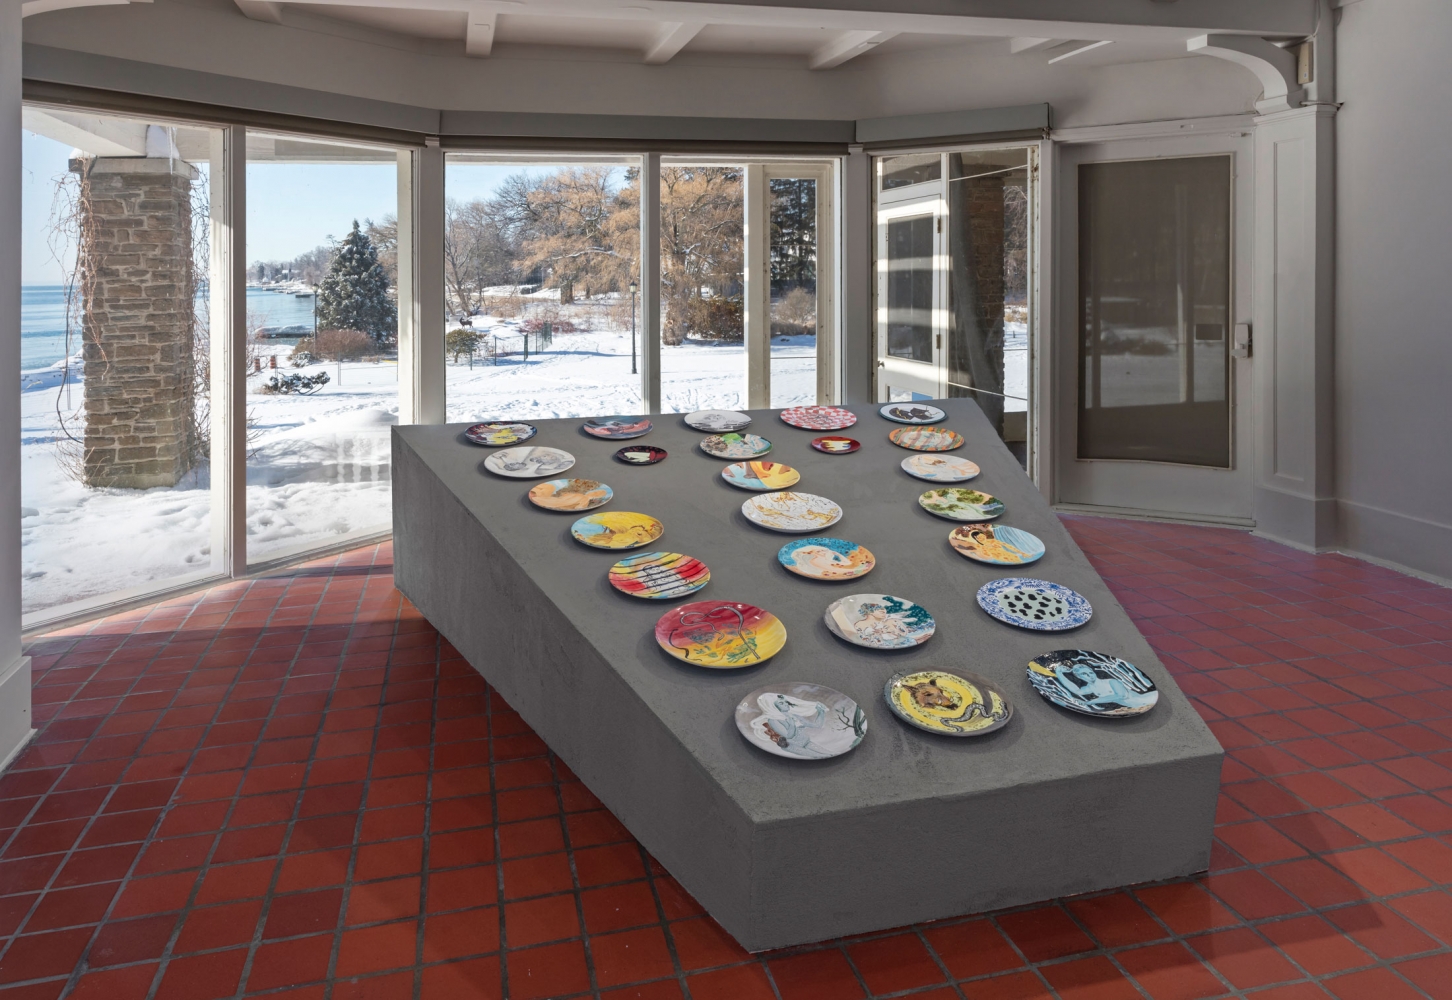 Allison Katz
Installation view of&amp;nbsp;Diary w/o Dates, 2018
Oakville Galleries, view at Gairloch Gardens